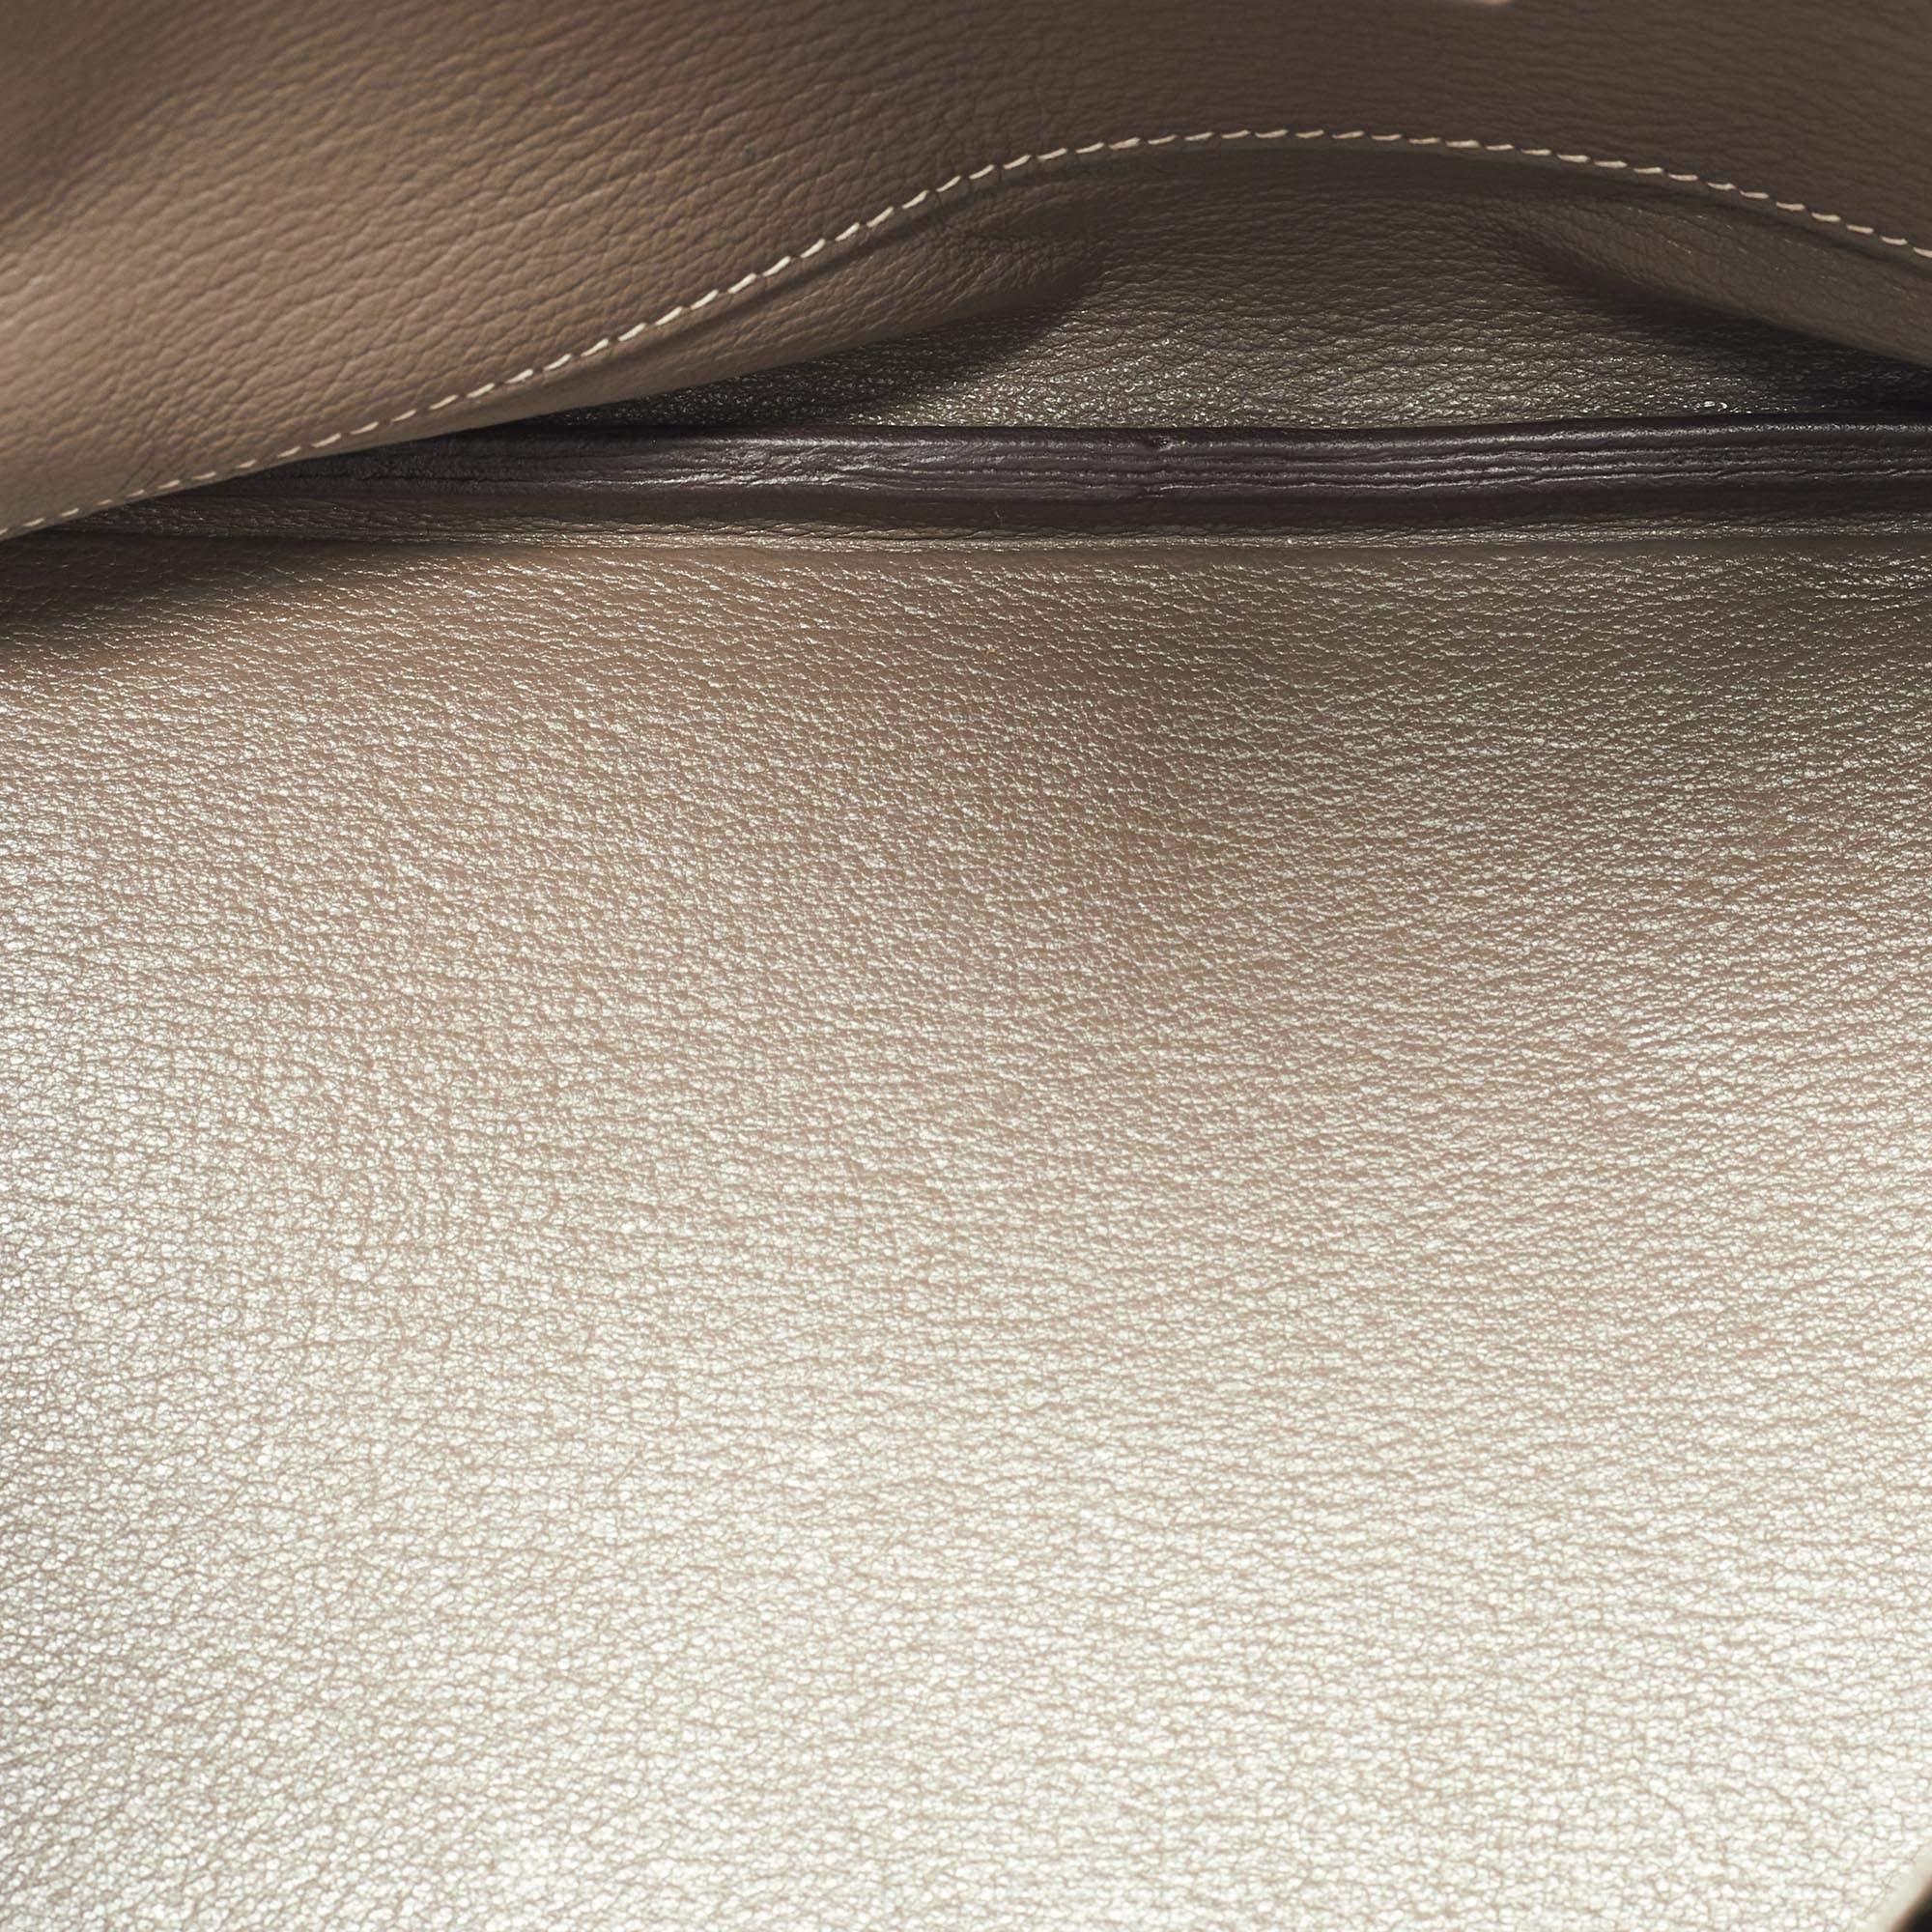 Hermes Etoupe Taurillion Clemence Leather Palladium Finish Birkin 30 Bag For Sale 10